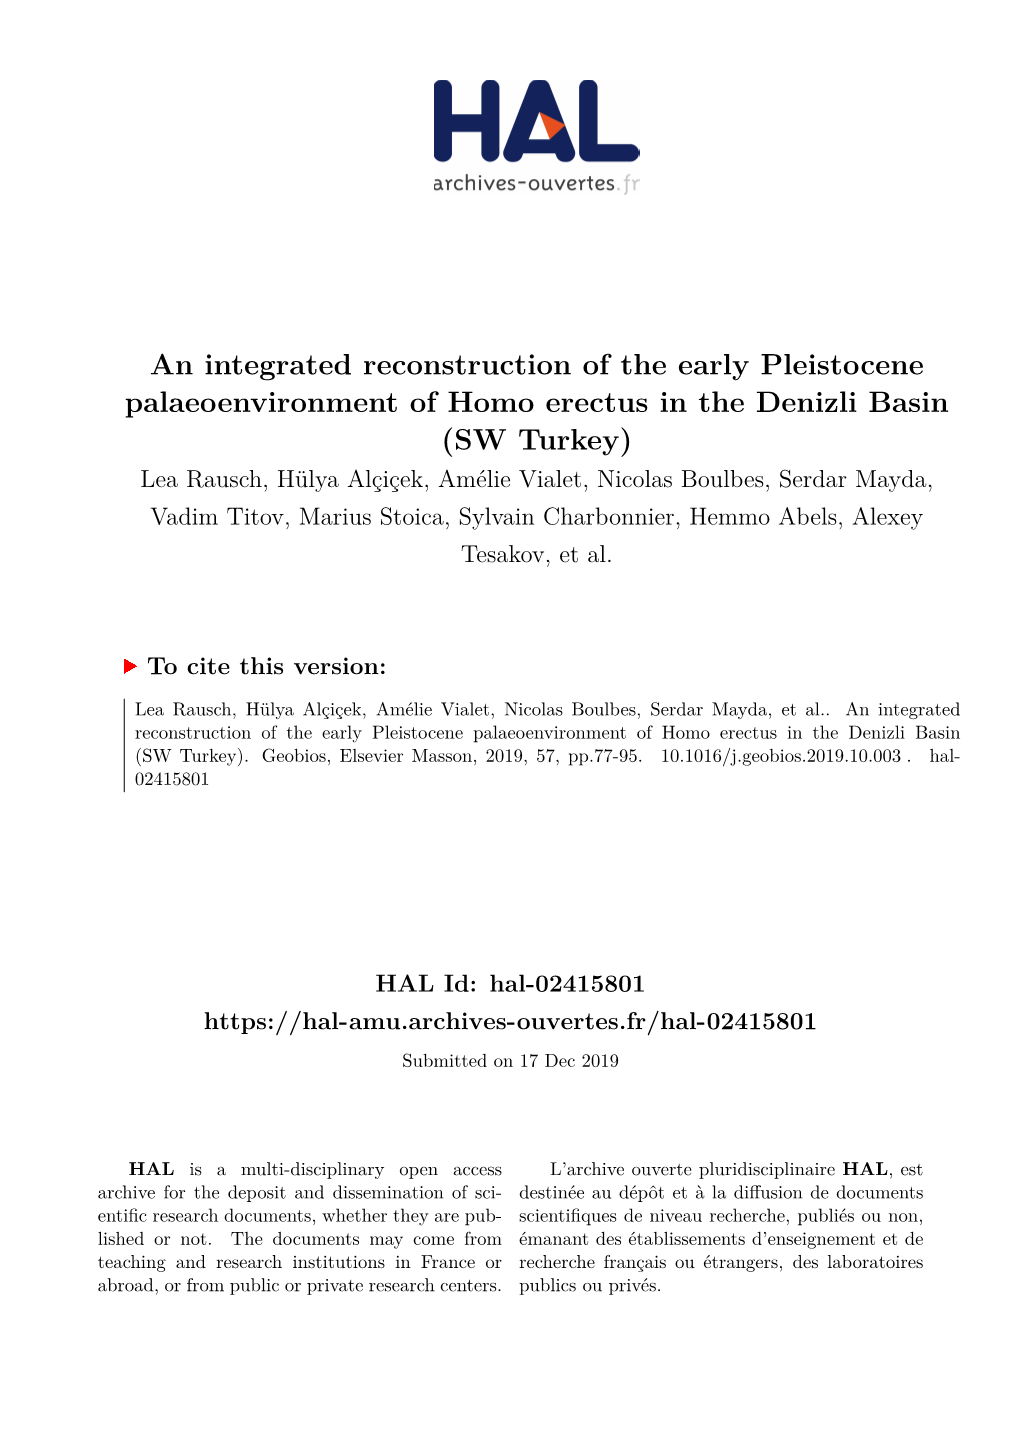 An Integrated Reconstruction of the Early Pleistocene Palaeoenvironment of Homo Erectus in the Denizli Basin (SW Turkey)